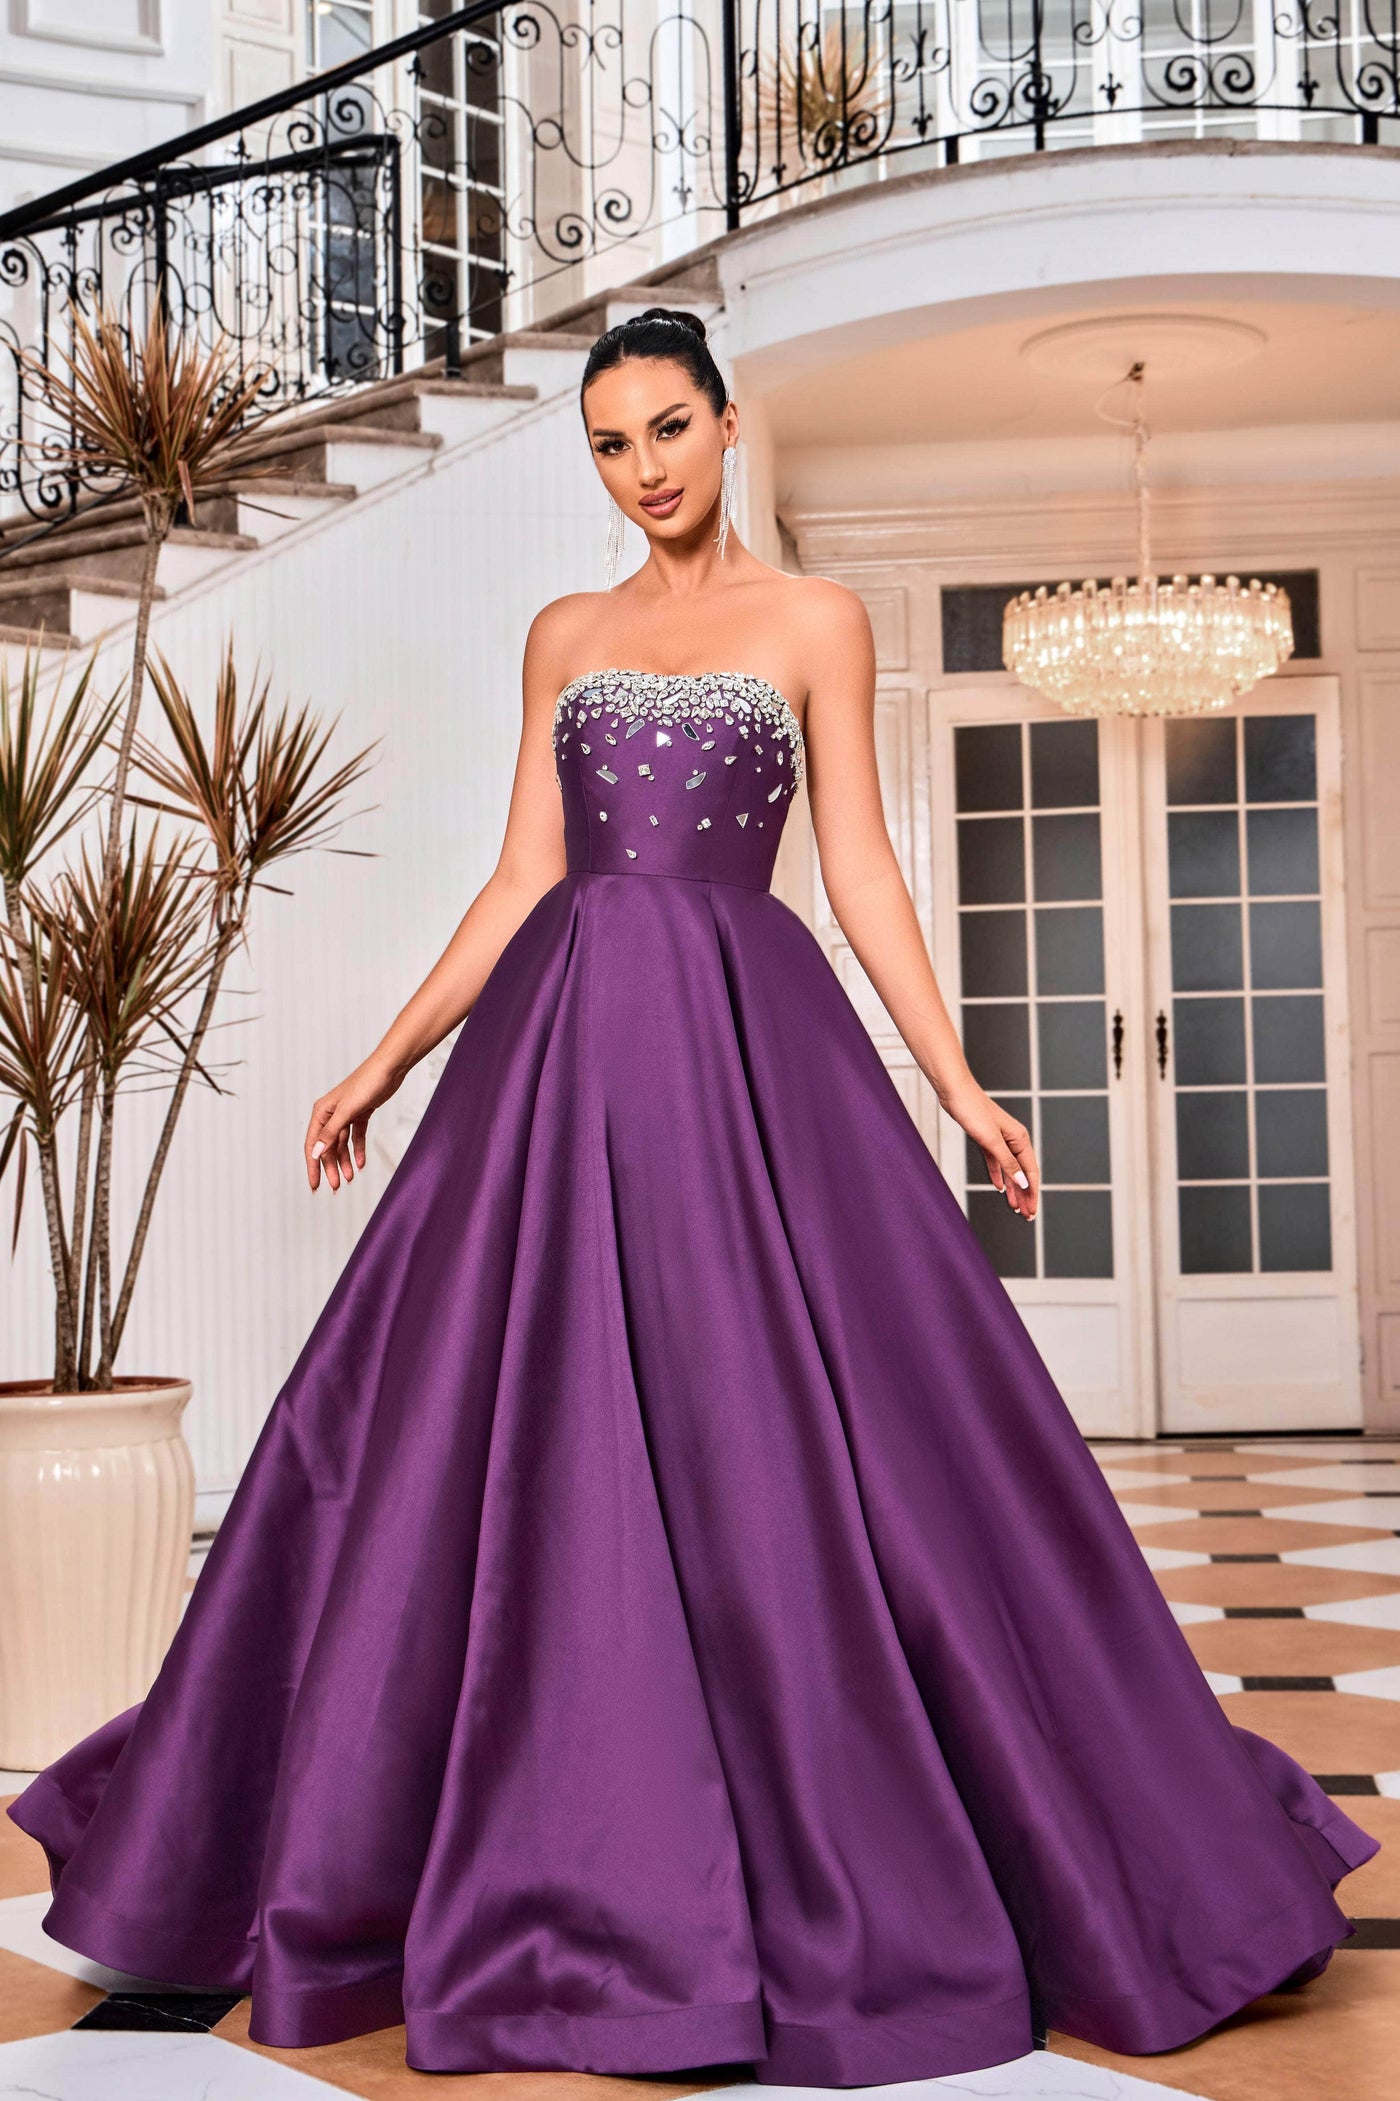 J'Adore Dresses J24009 - Embellished A-Line Prom Dress Special Occasion Dresses